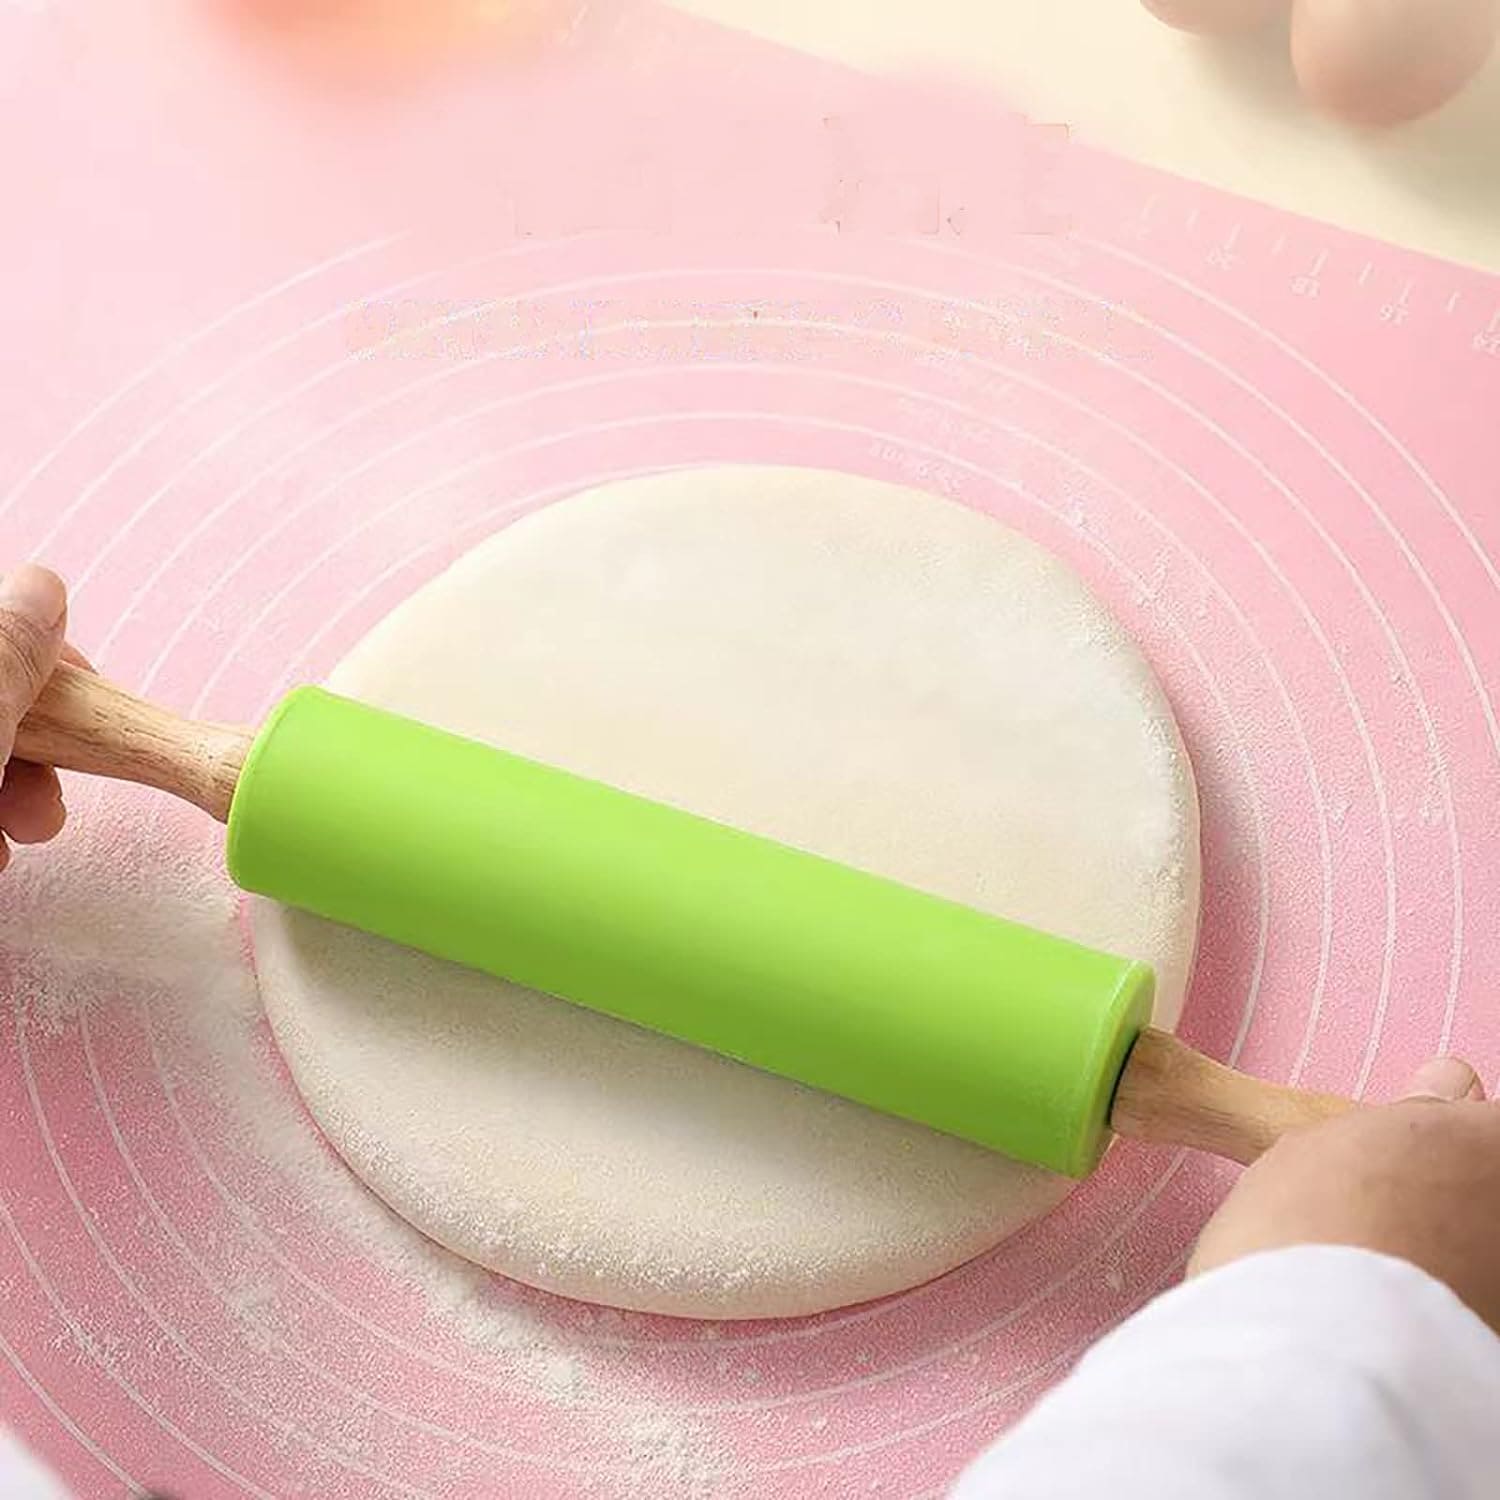 Silicone Dough Roller, Wooden Handle Dough Roller, Dumpling Skin Pressing Flour Stick Baking Tool, Kitchen Roti Belan, Non Stick Surface Baking Roller, Kitchen Cooking Accessories